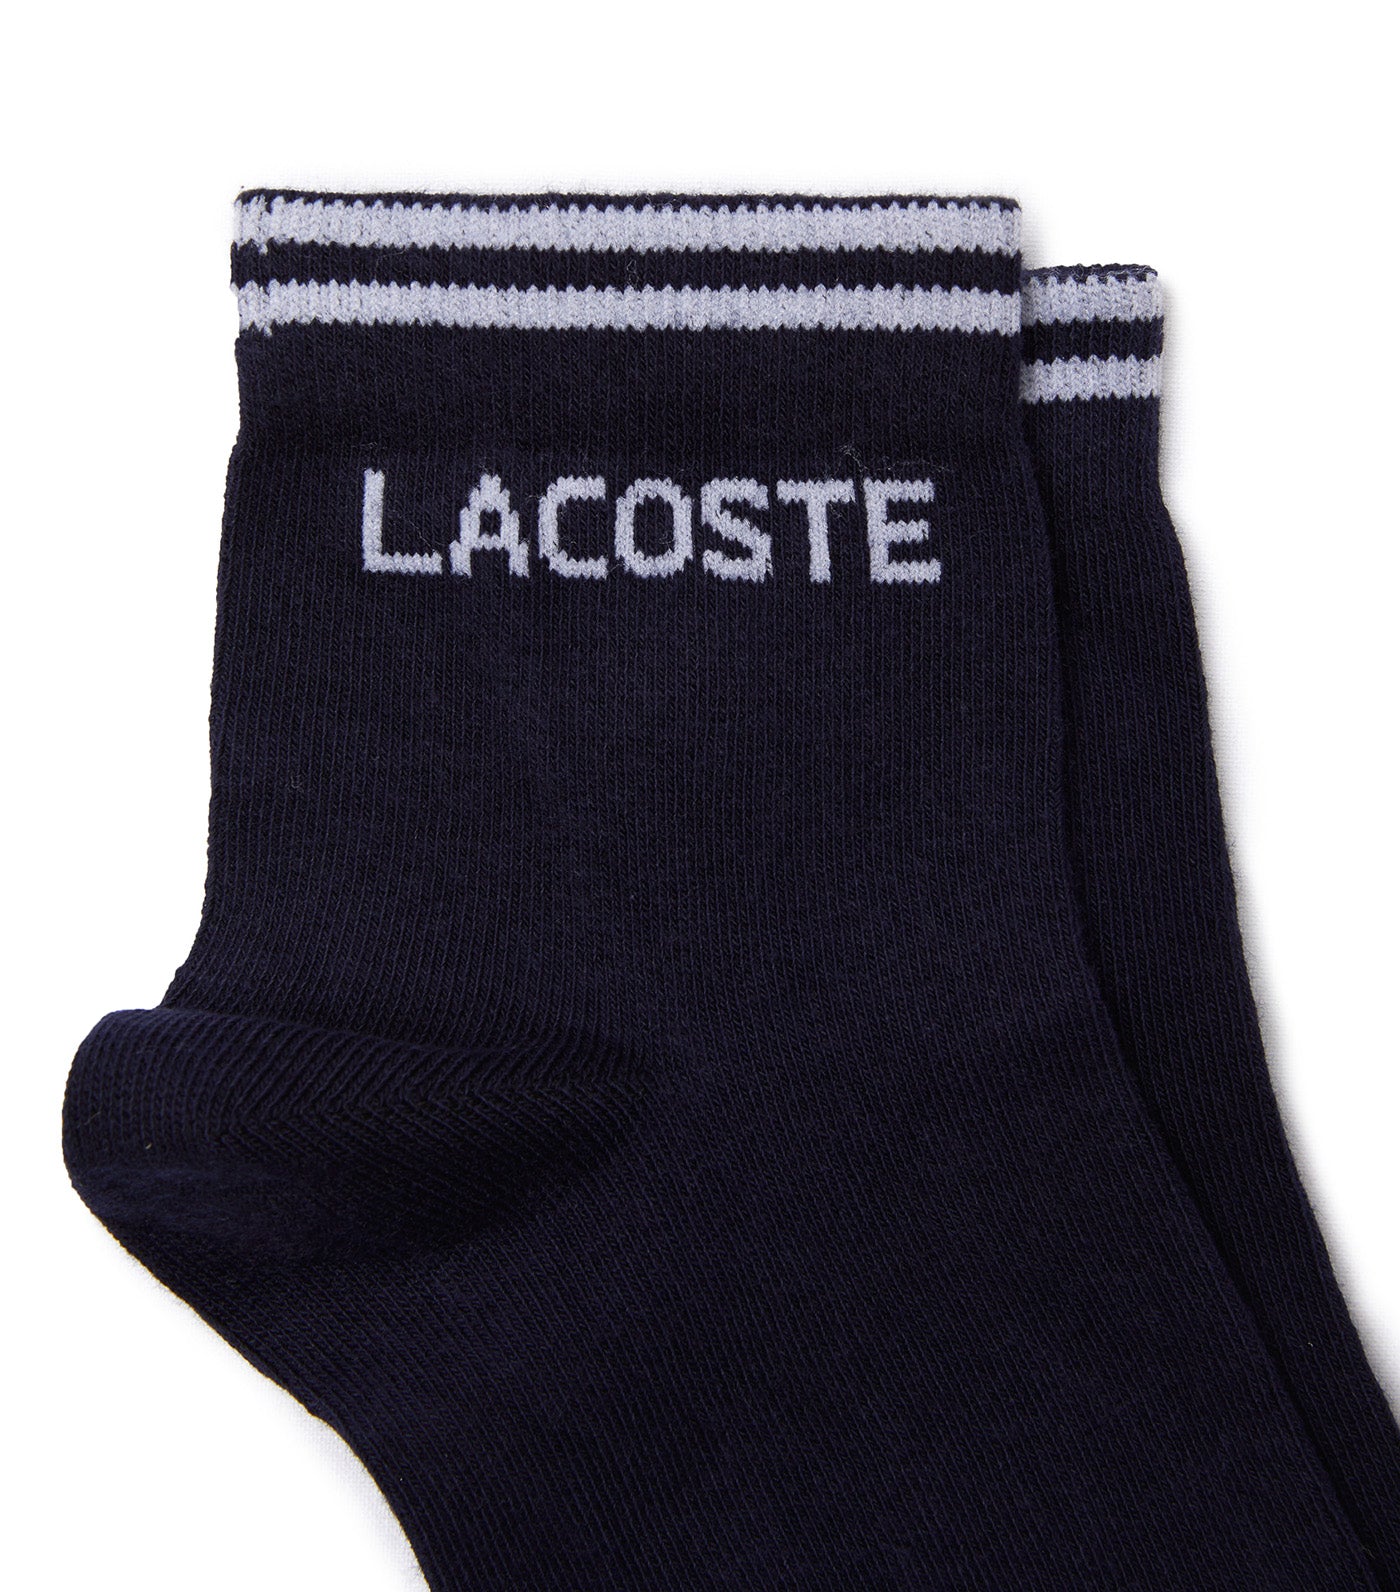 Men’s Lacoste SPORT Low Cotton Sock 2-Pack Navy Blue/White